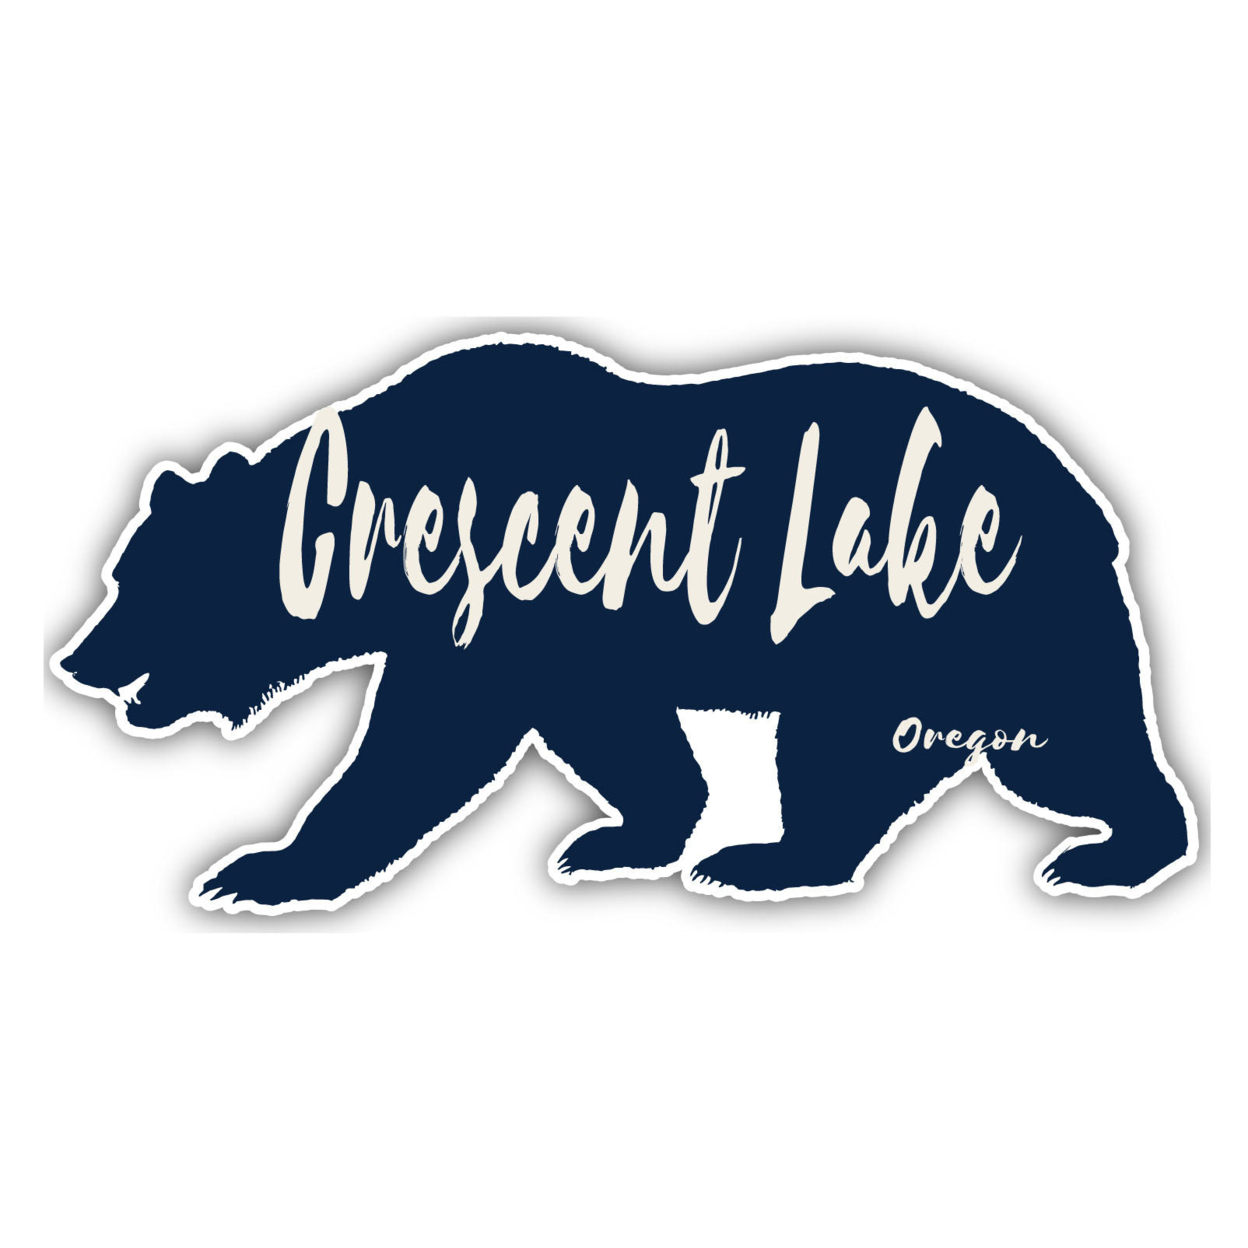 Crescent Lake Oregon Souvenir Decorative Stickers (Choose Theme And Size) - 4-Pack, 12-Inch, Tent